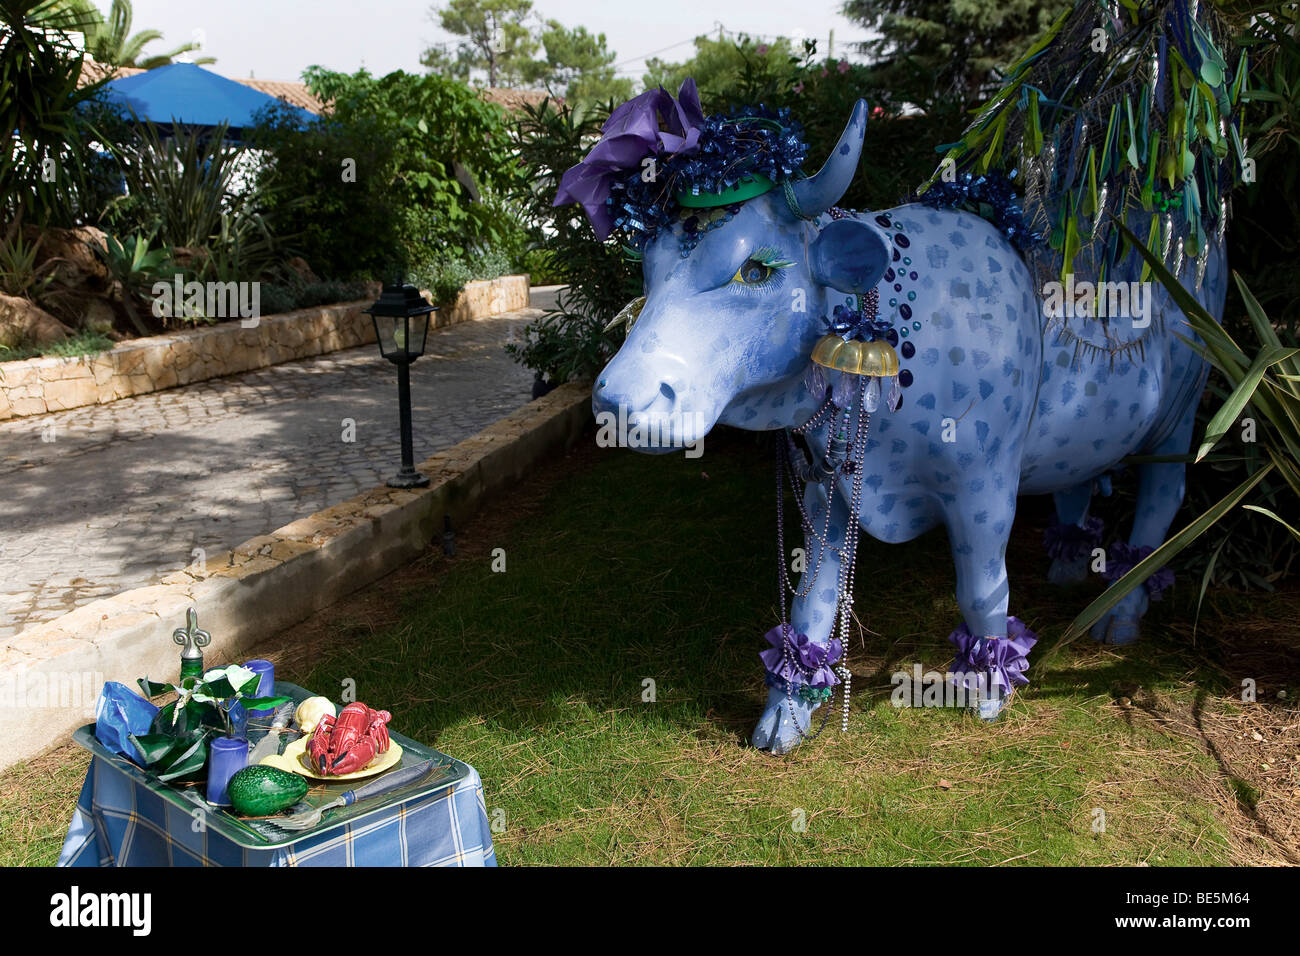 Blue cow sculpture in front of the restaurant São Gabriel, Almansil, Algarve, Portugal, Europe Stock Photo